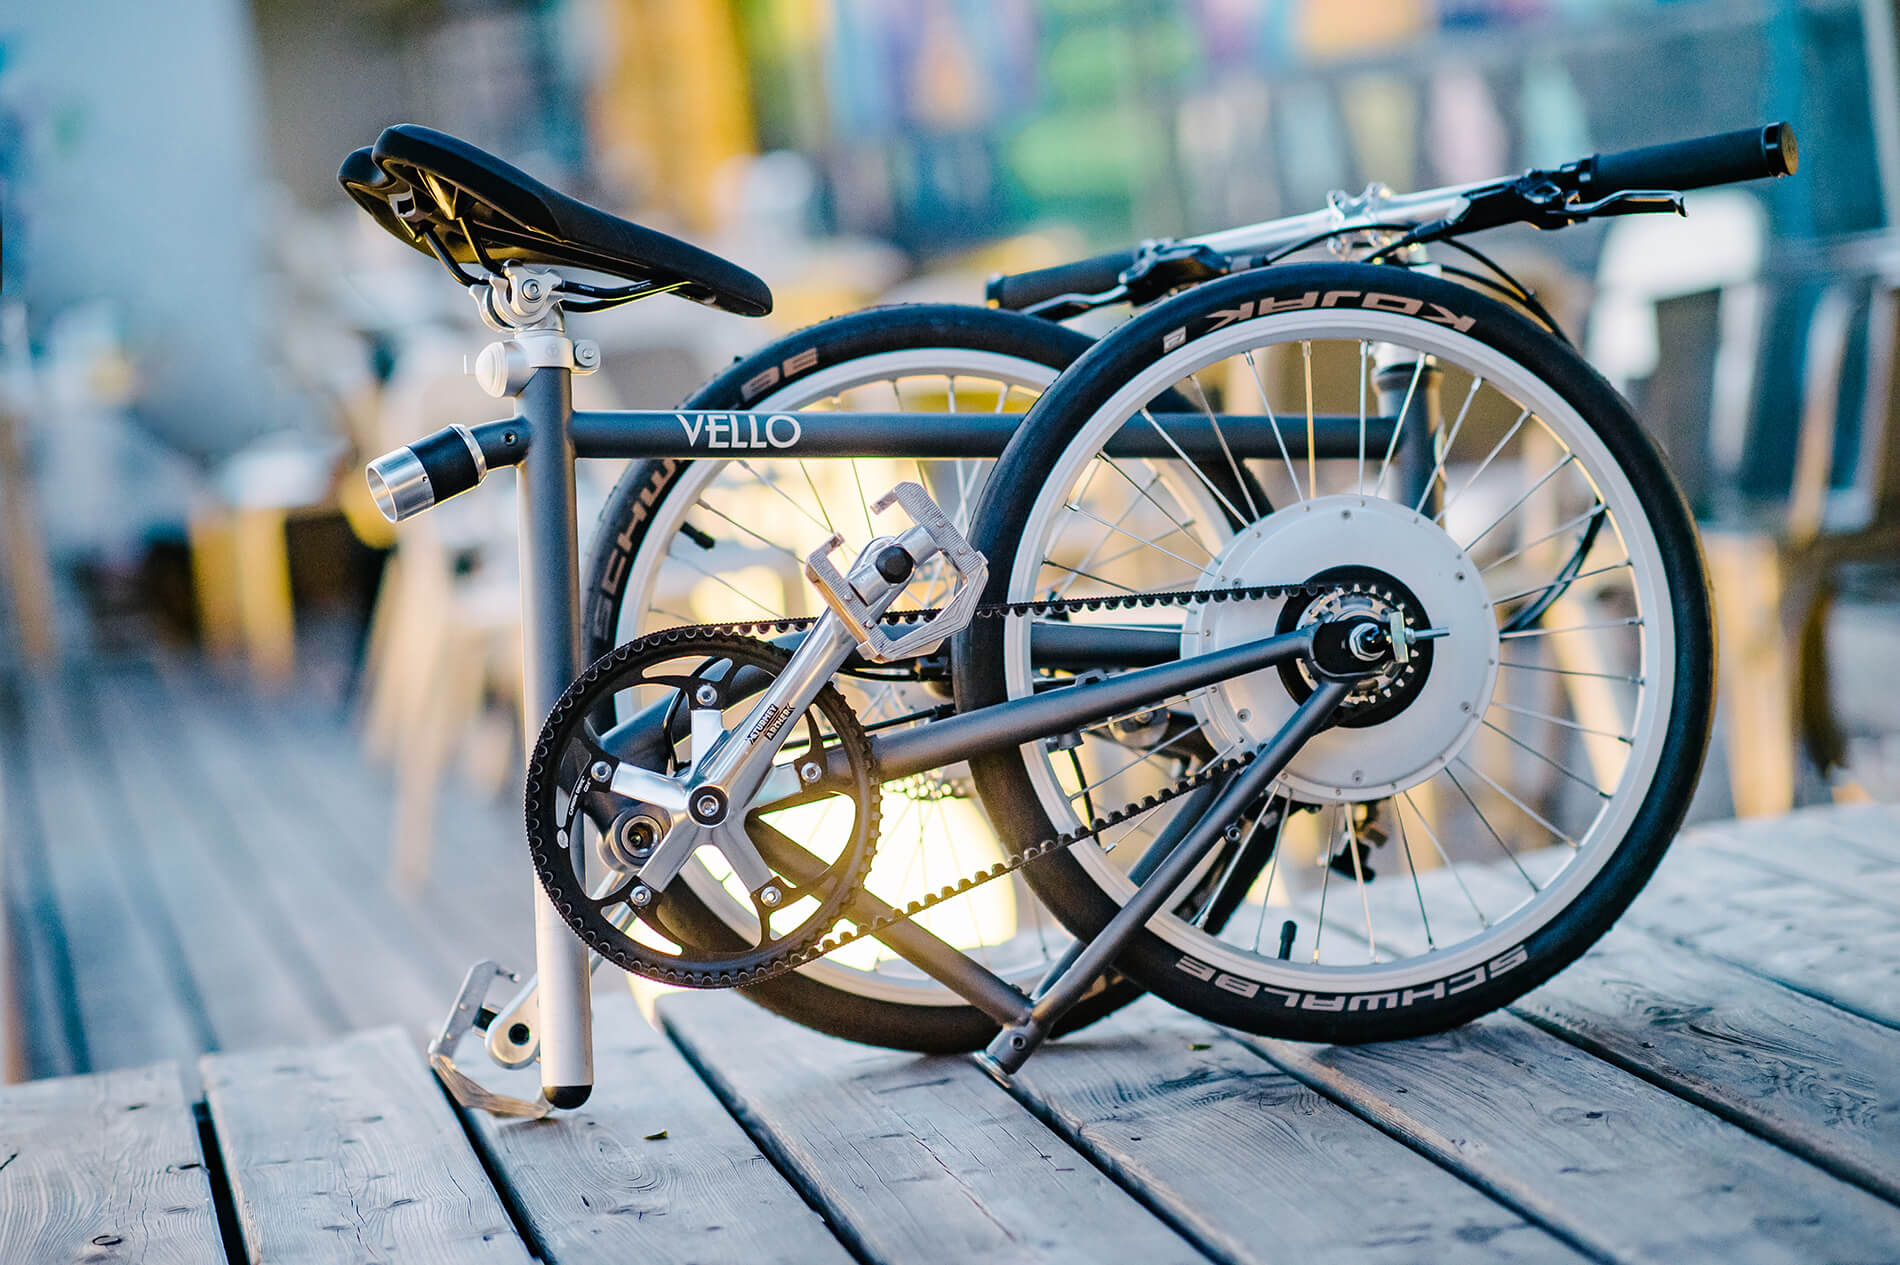 VELLO Foldable E Bike - Electric Folding Bike - Compact E-Bike - Lightweight Bicycle - City Bike with Engine